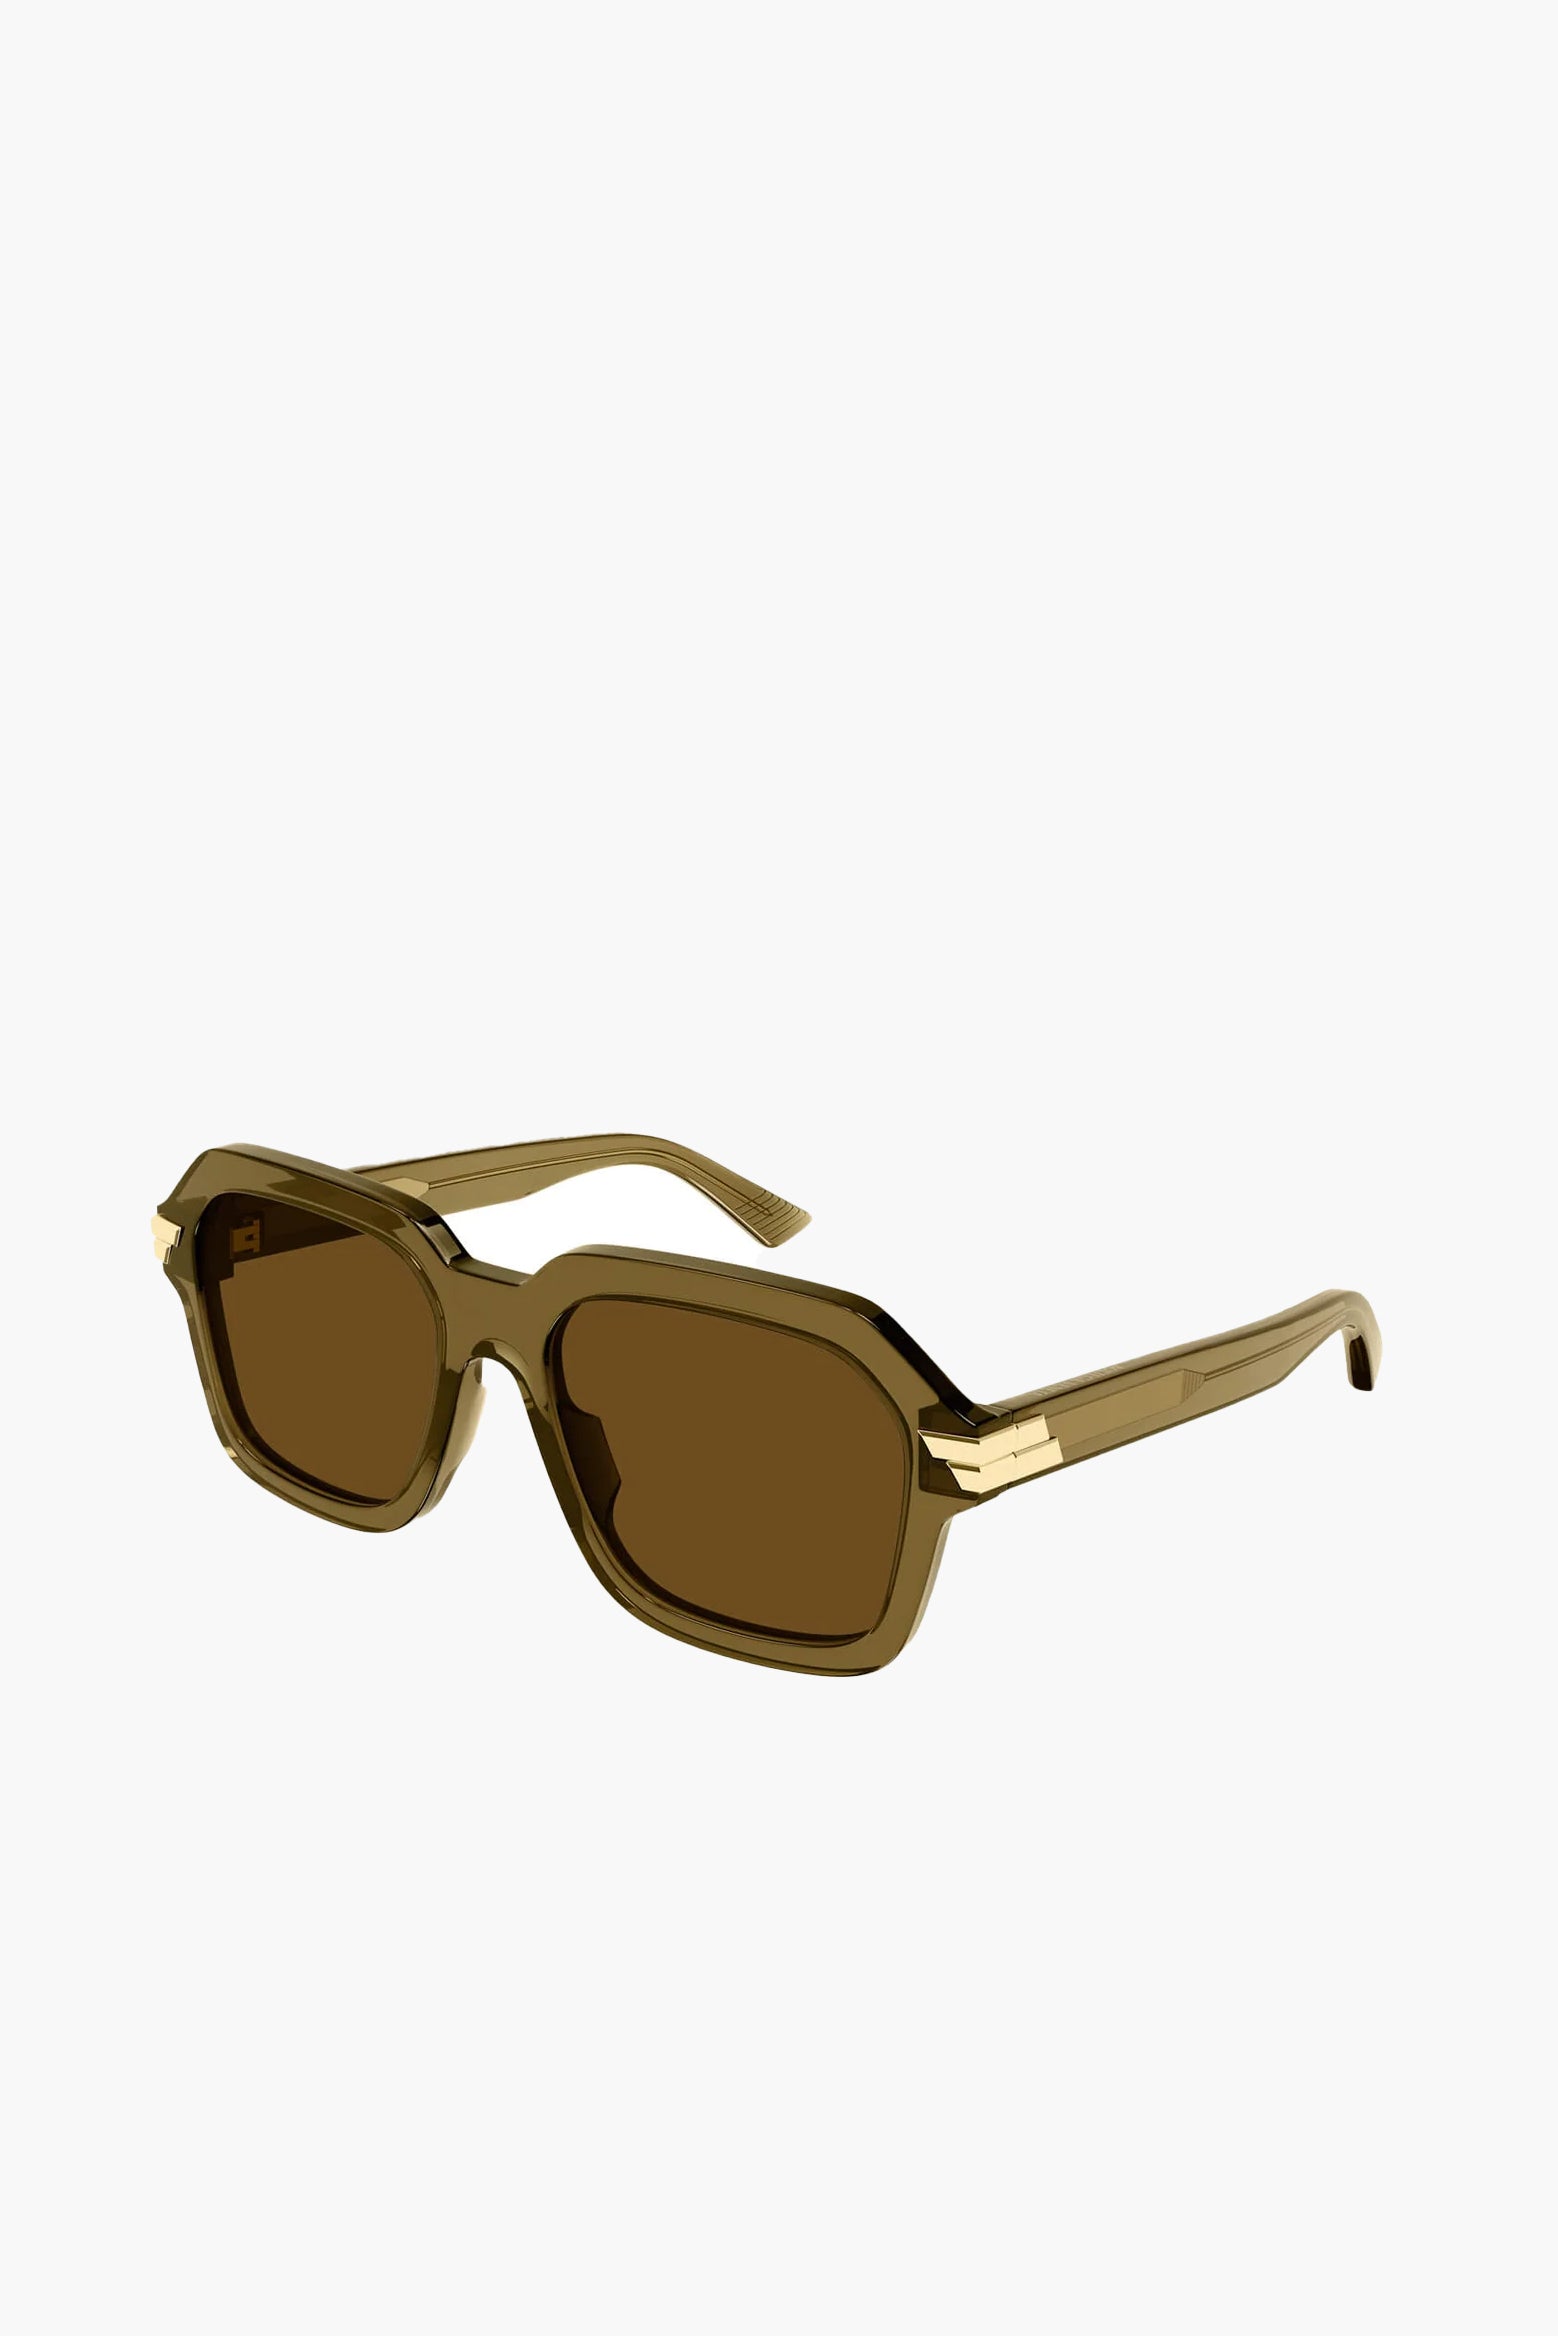 Bottega Veneta Bold Ribbon Acetate Sunglasses in Green available at The New Trend